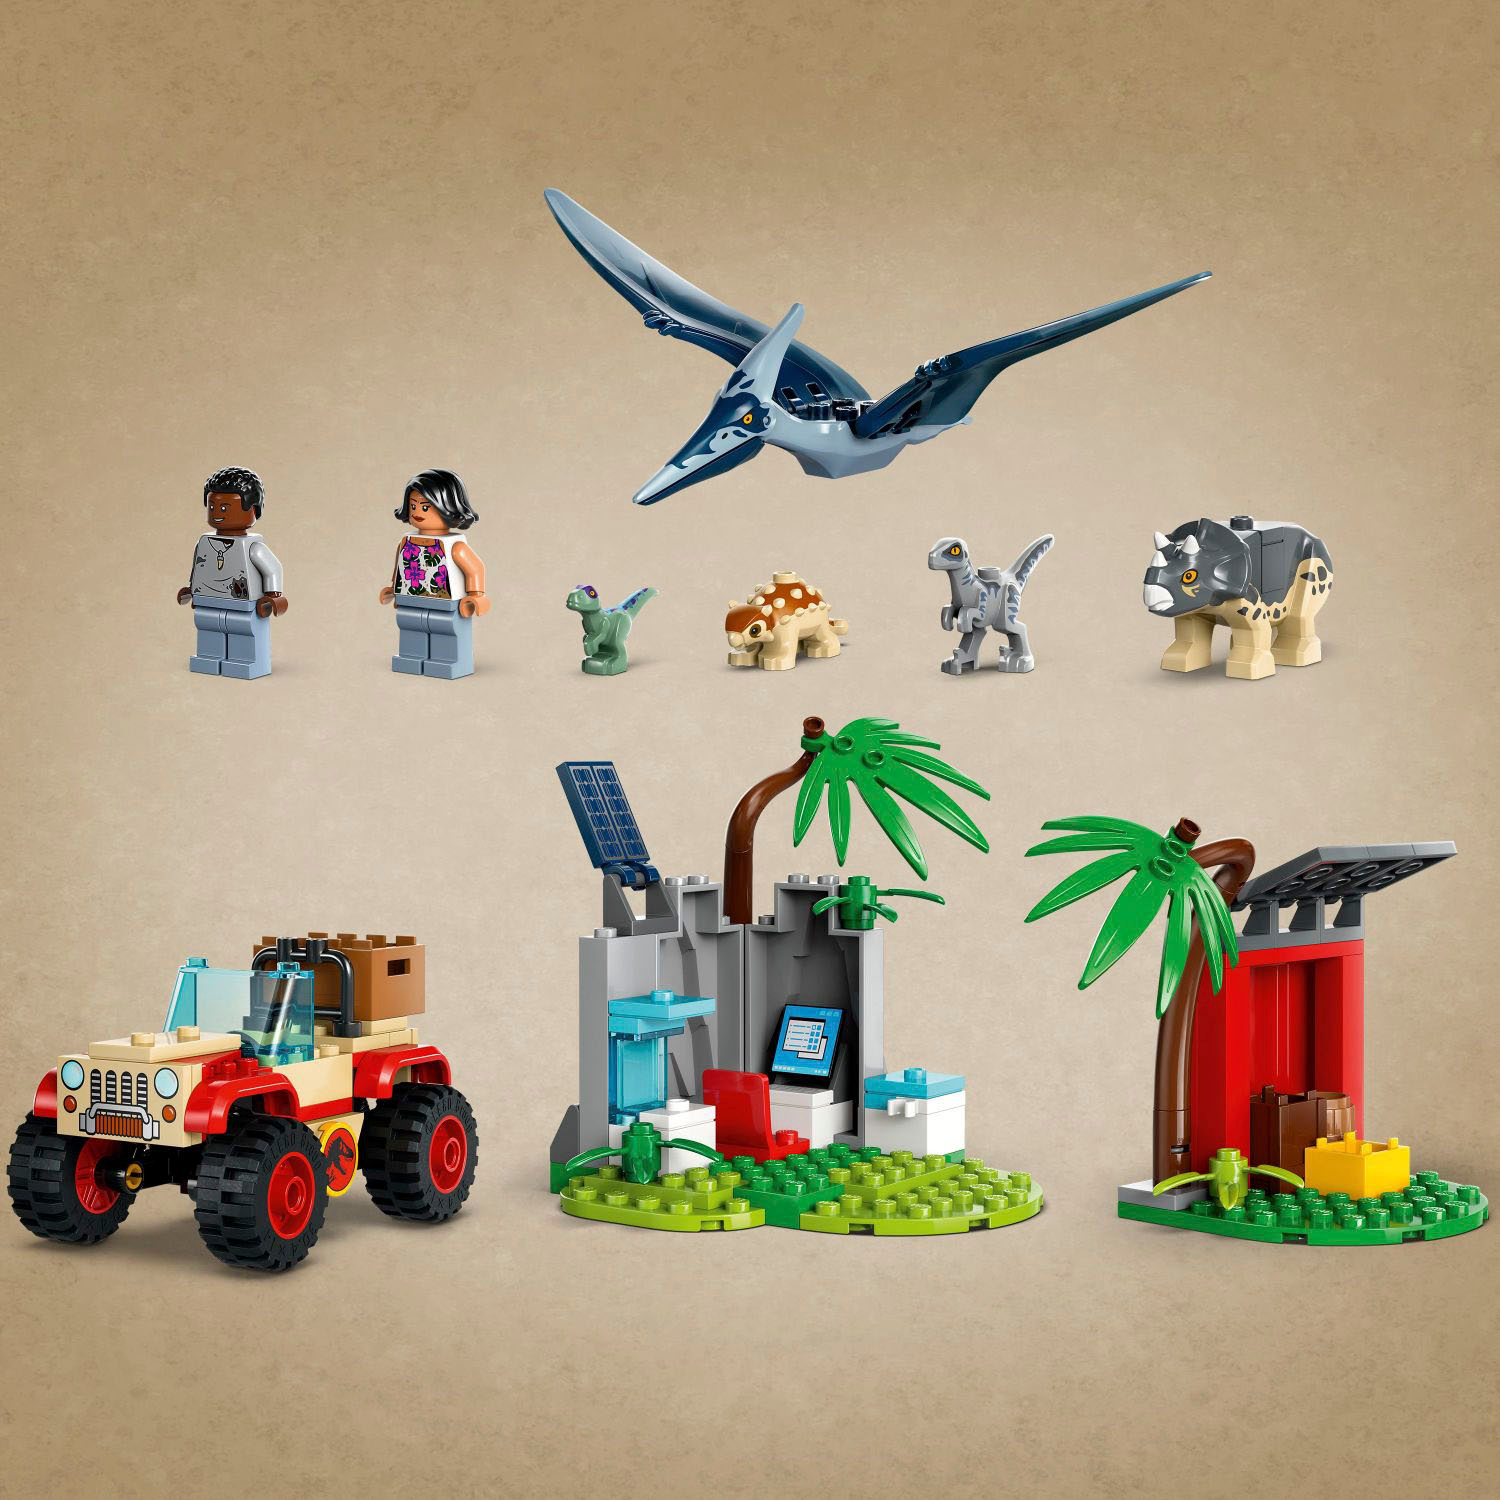 LEGO Jurassic World Baby Dinosaur Rescue Center Building Toy 76964 6465044  - Best Buy